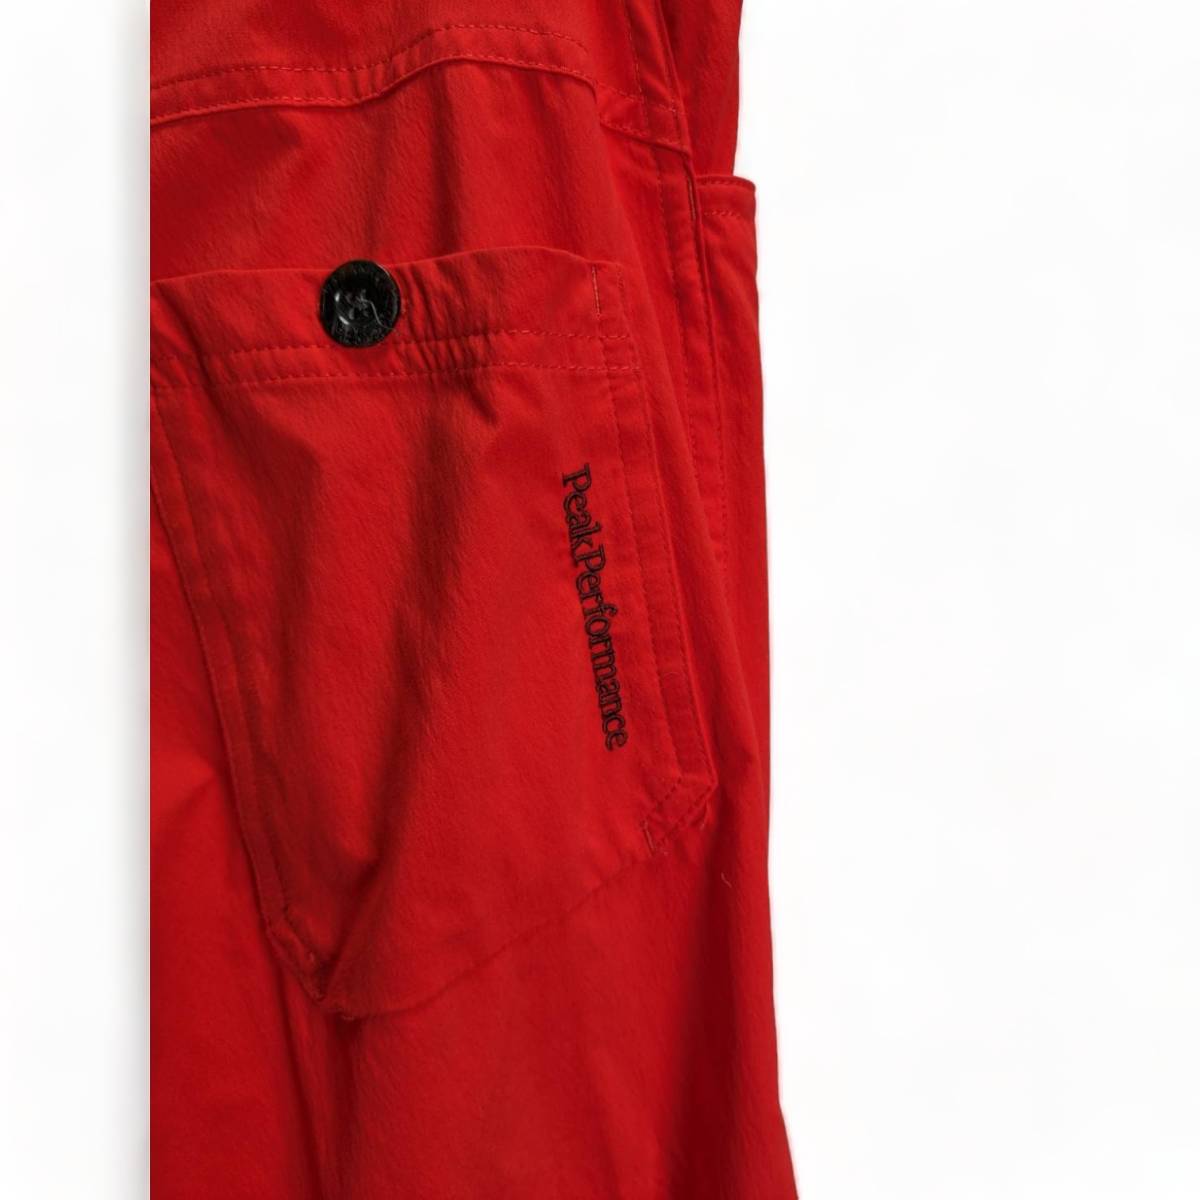 Peak Performance: pants red lady's XS size 